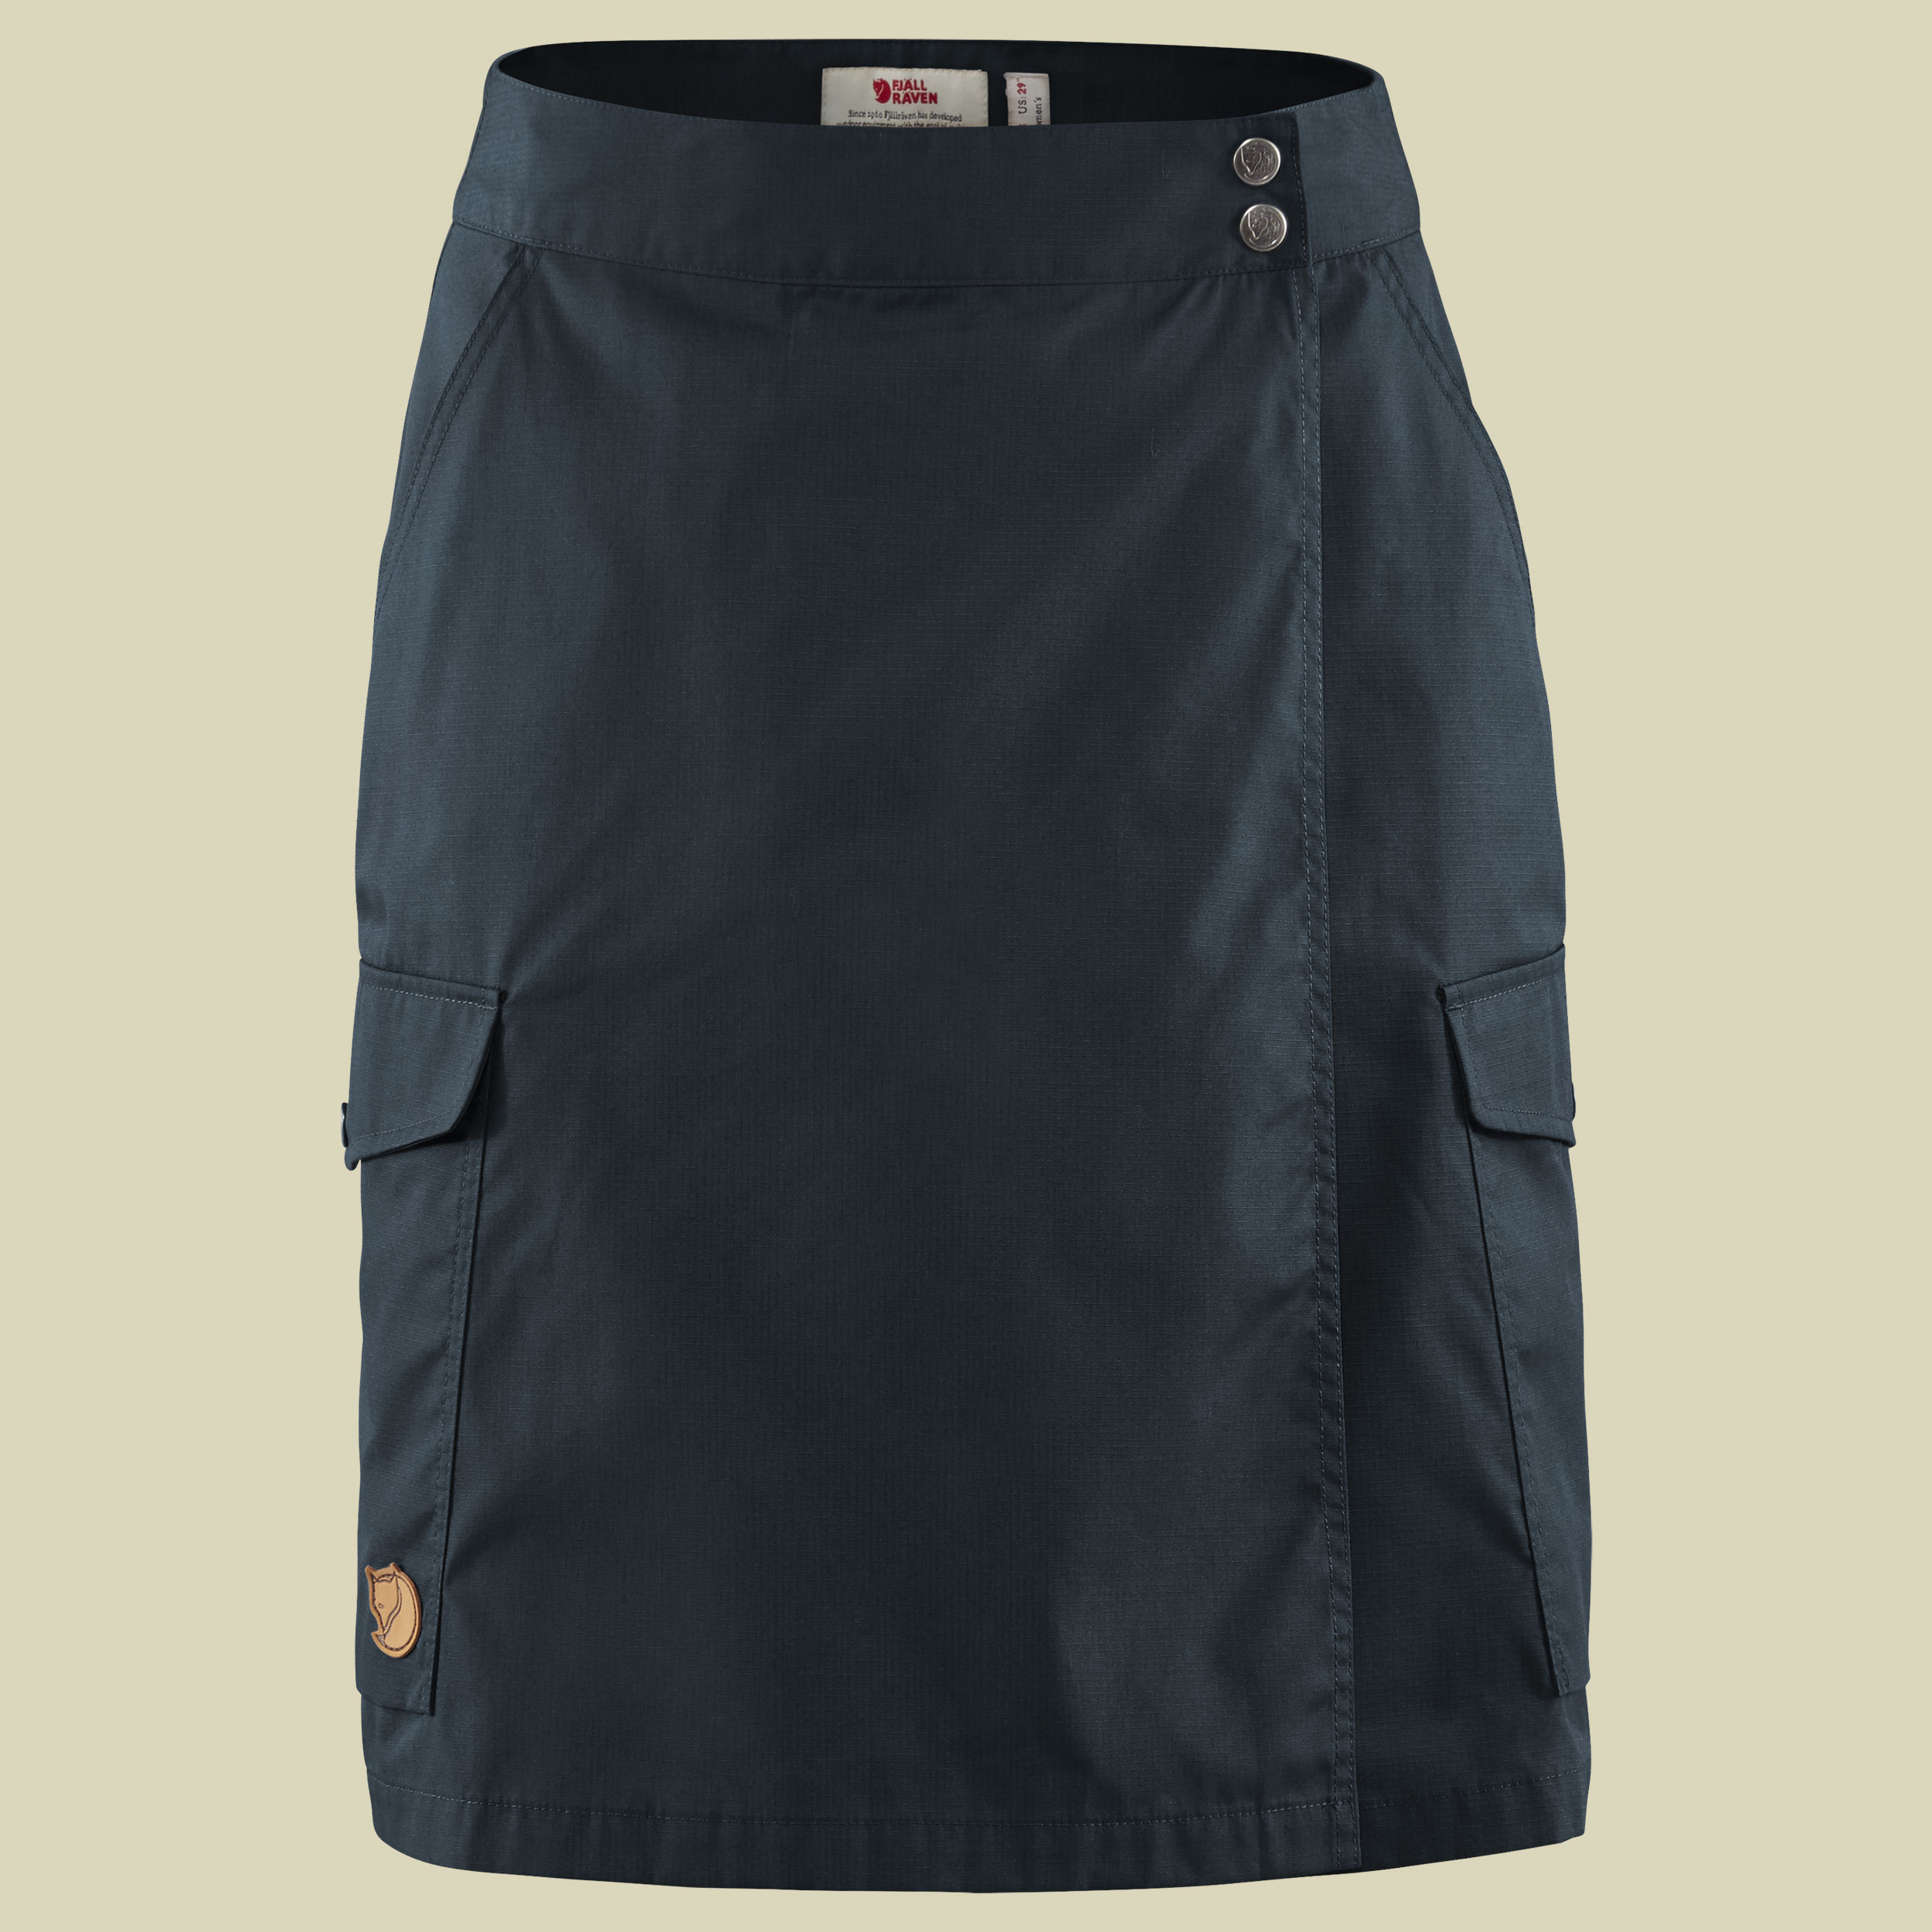 Övik Travel Skirt Women Größe 36 Farbe dark navy